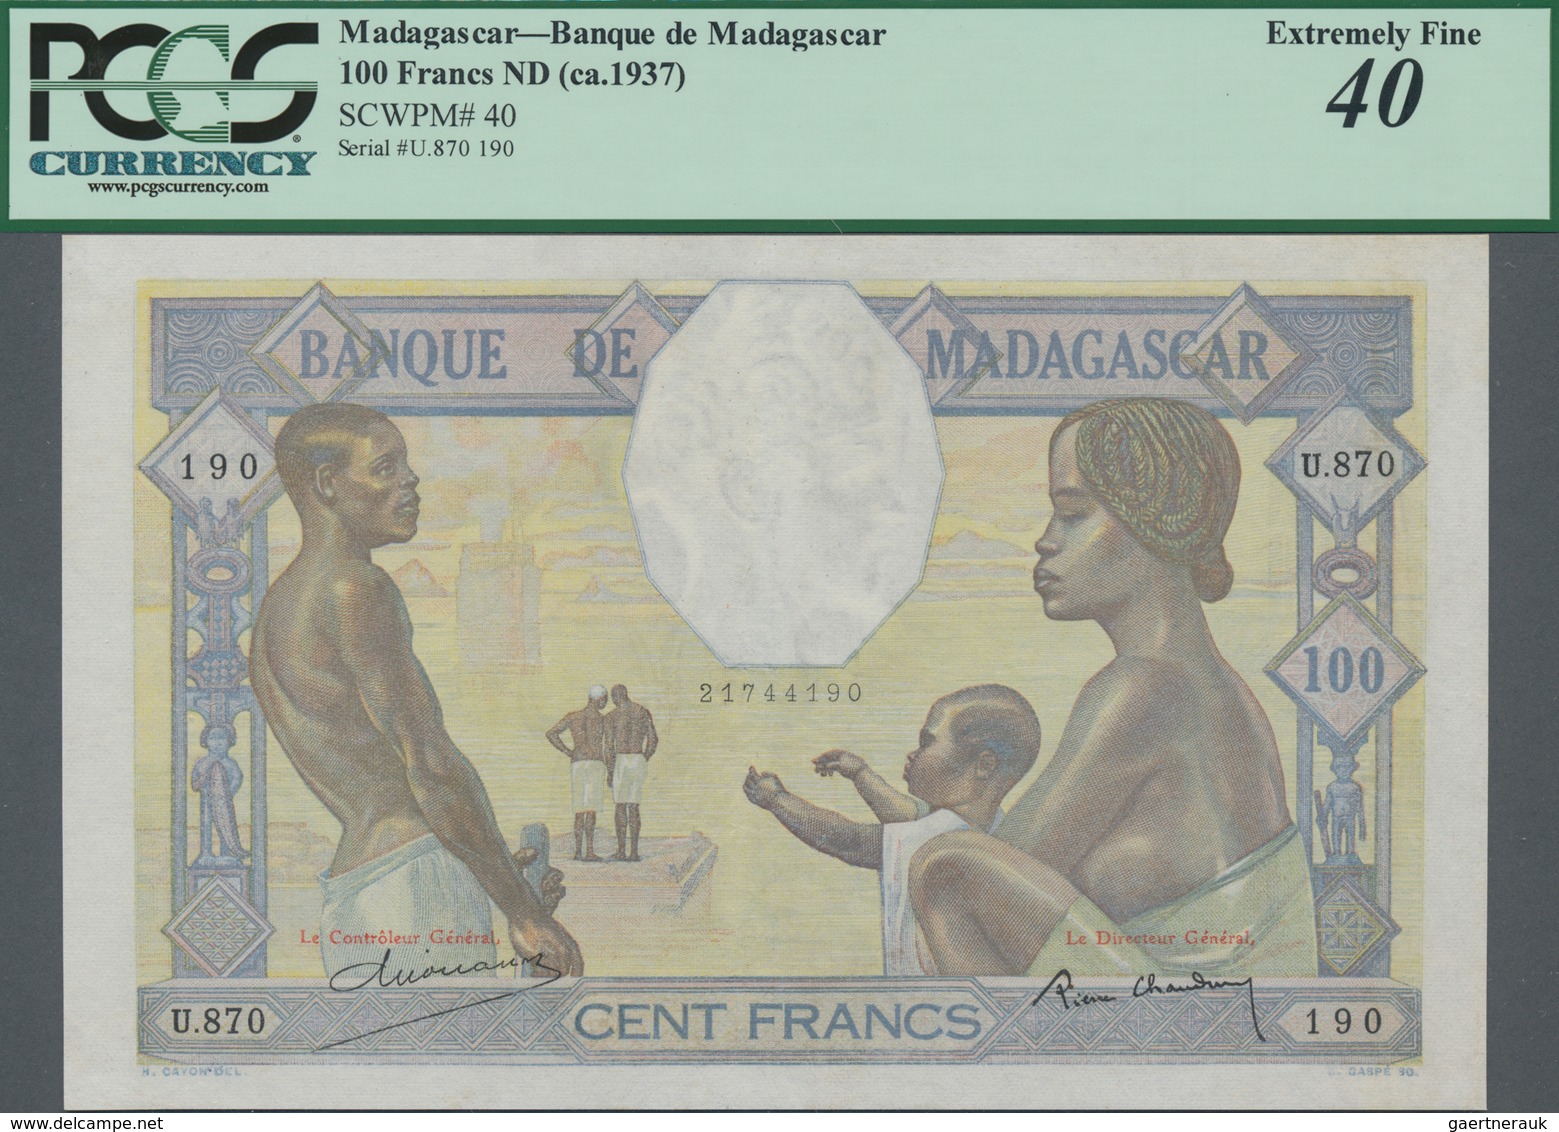 Madagascar: Banque De Madagascar 100 Francs ND(1937), P.40, Still Great Condition With A Few Stronge - Madagascar